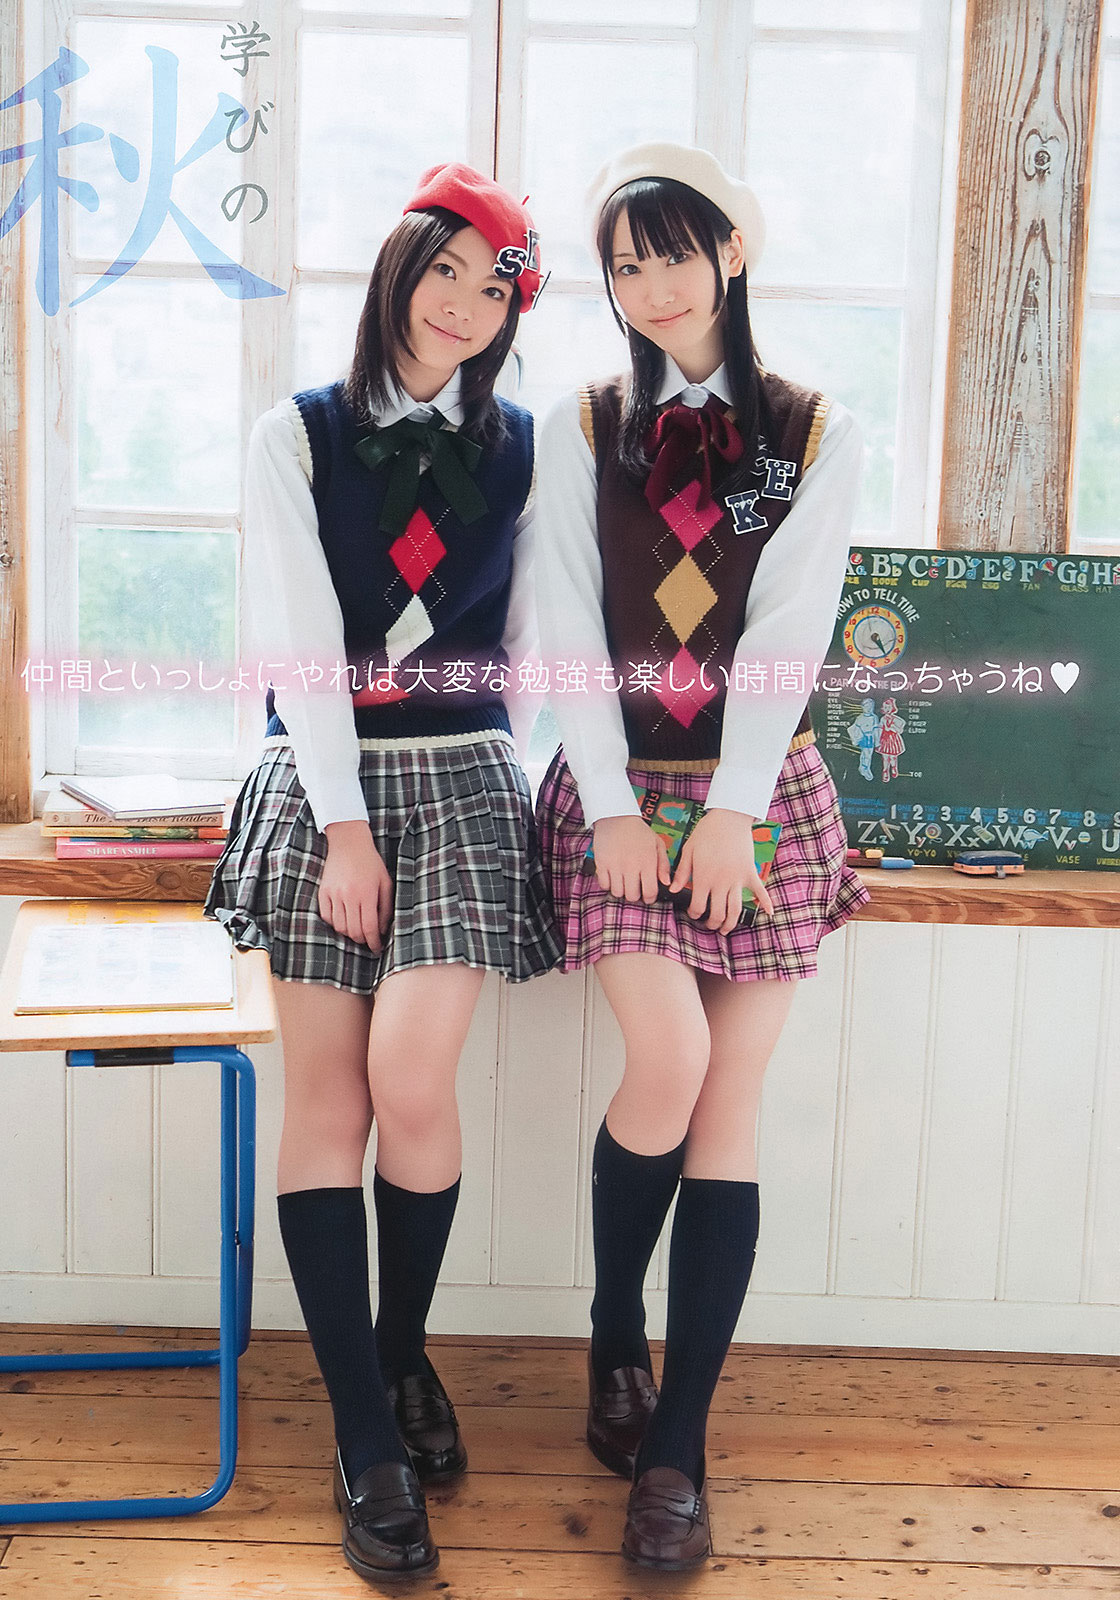 SKE48 Jurina and Rena Matsui Young Animal magazine